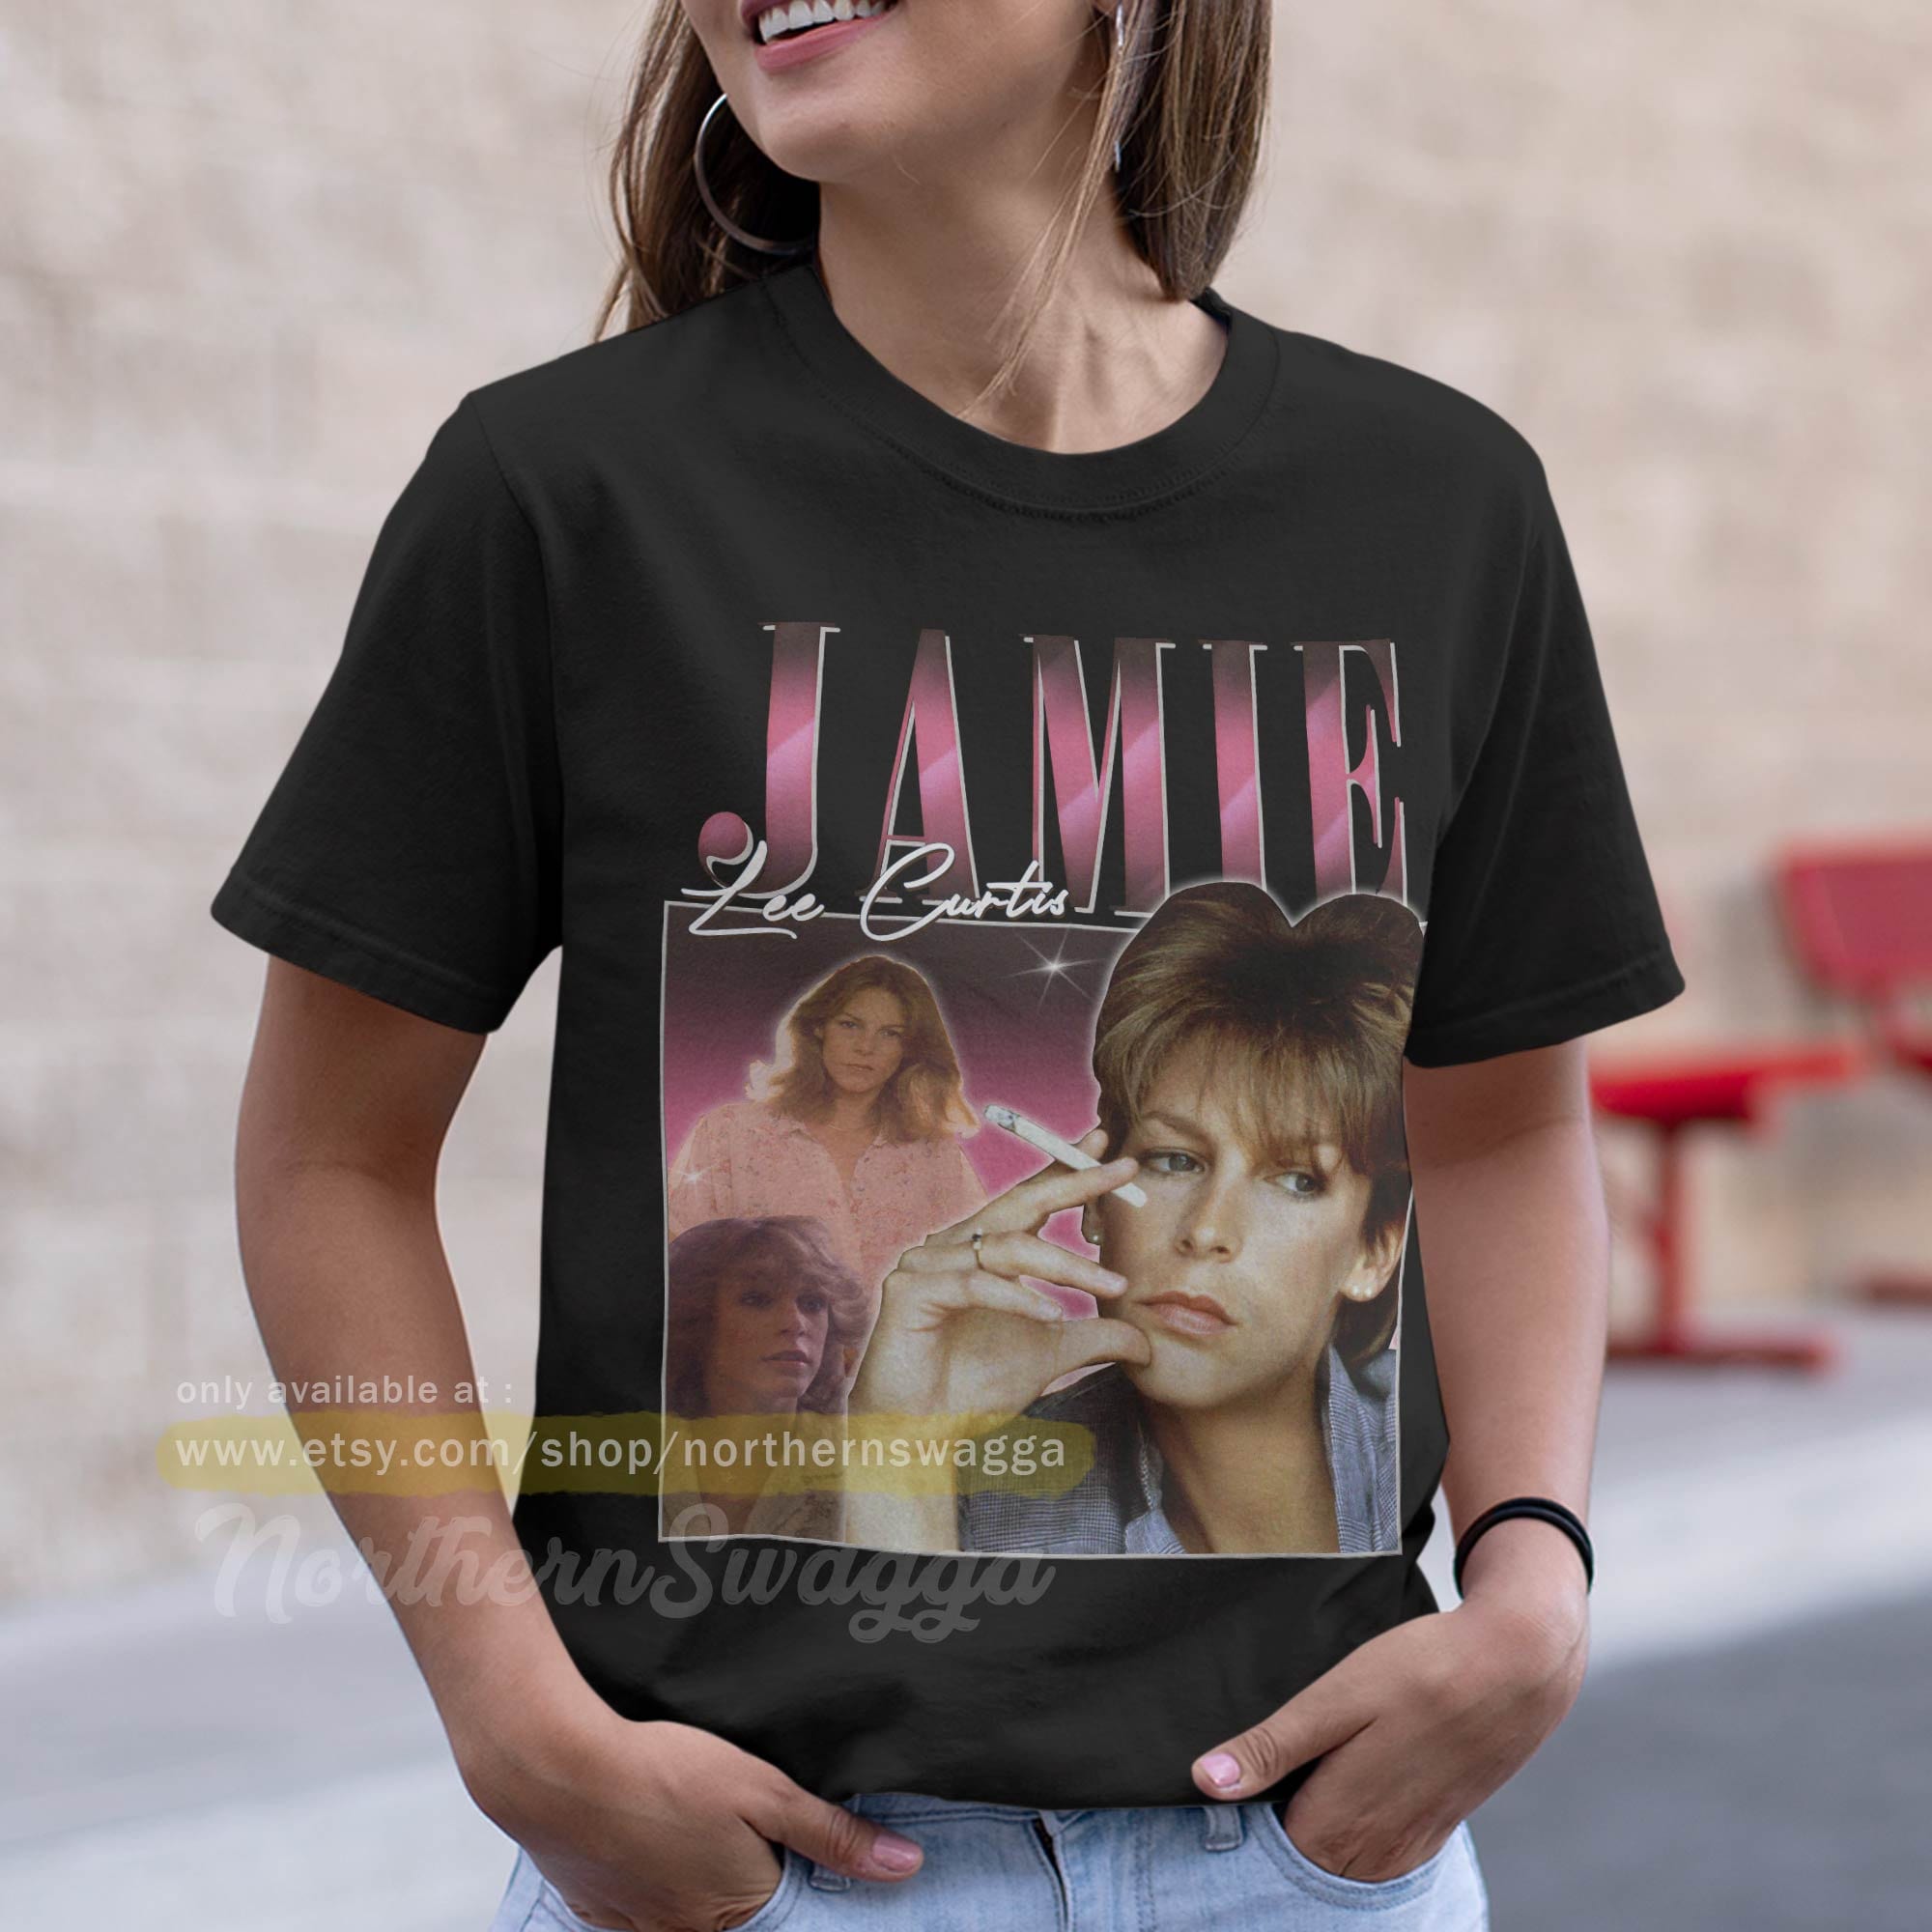 Jamie lee curtis shirt design retro style cool fan art t-shirt 90s poster 285 tee